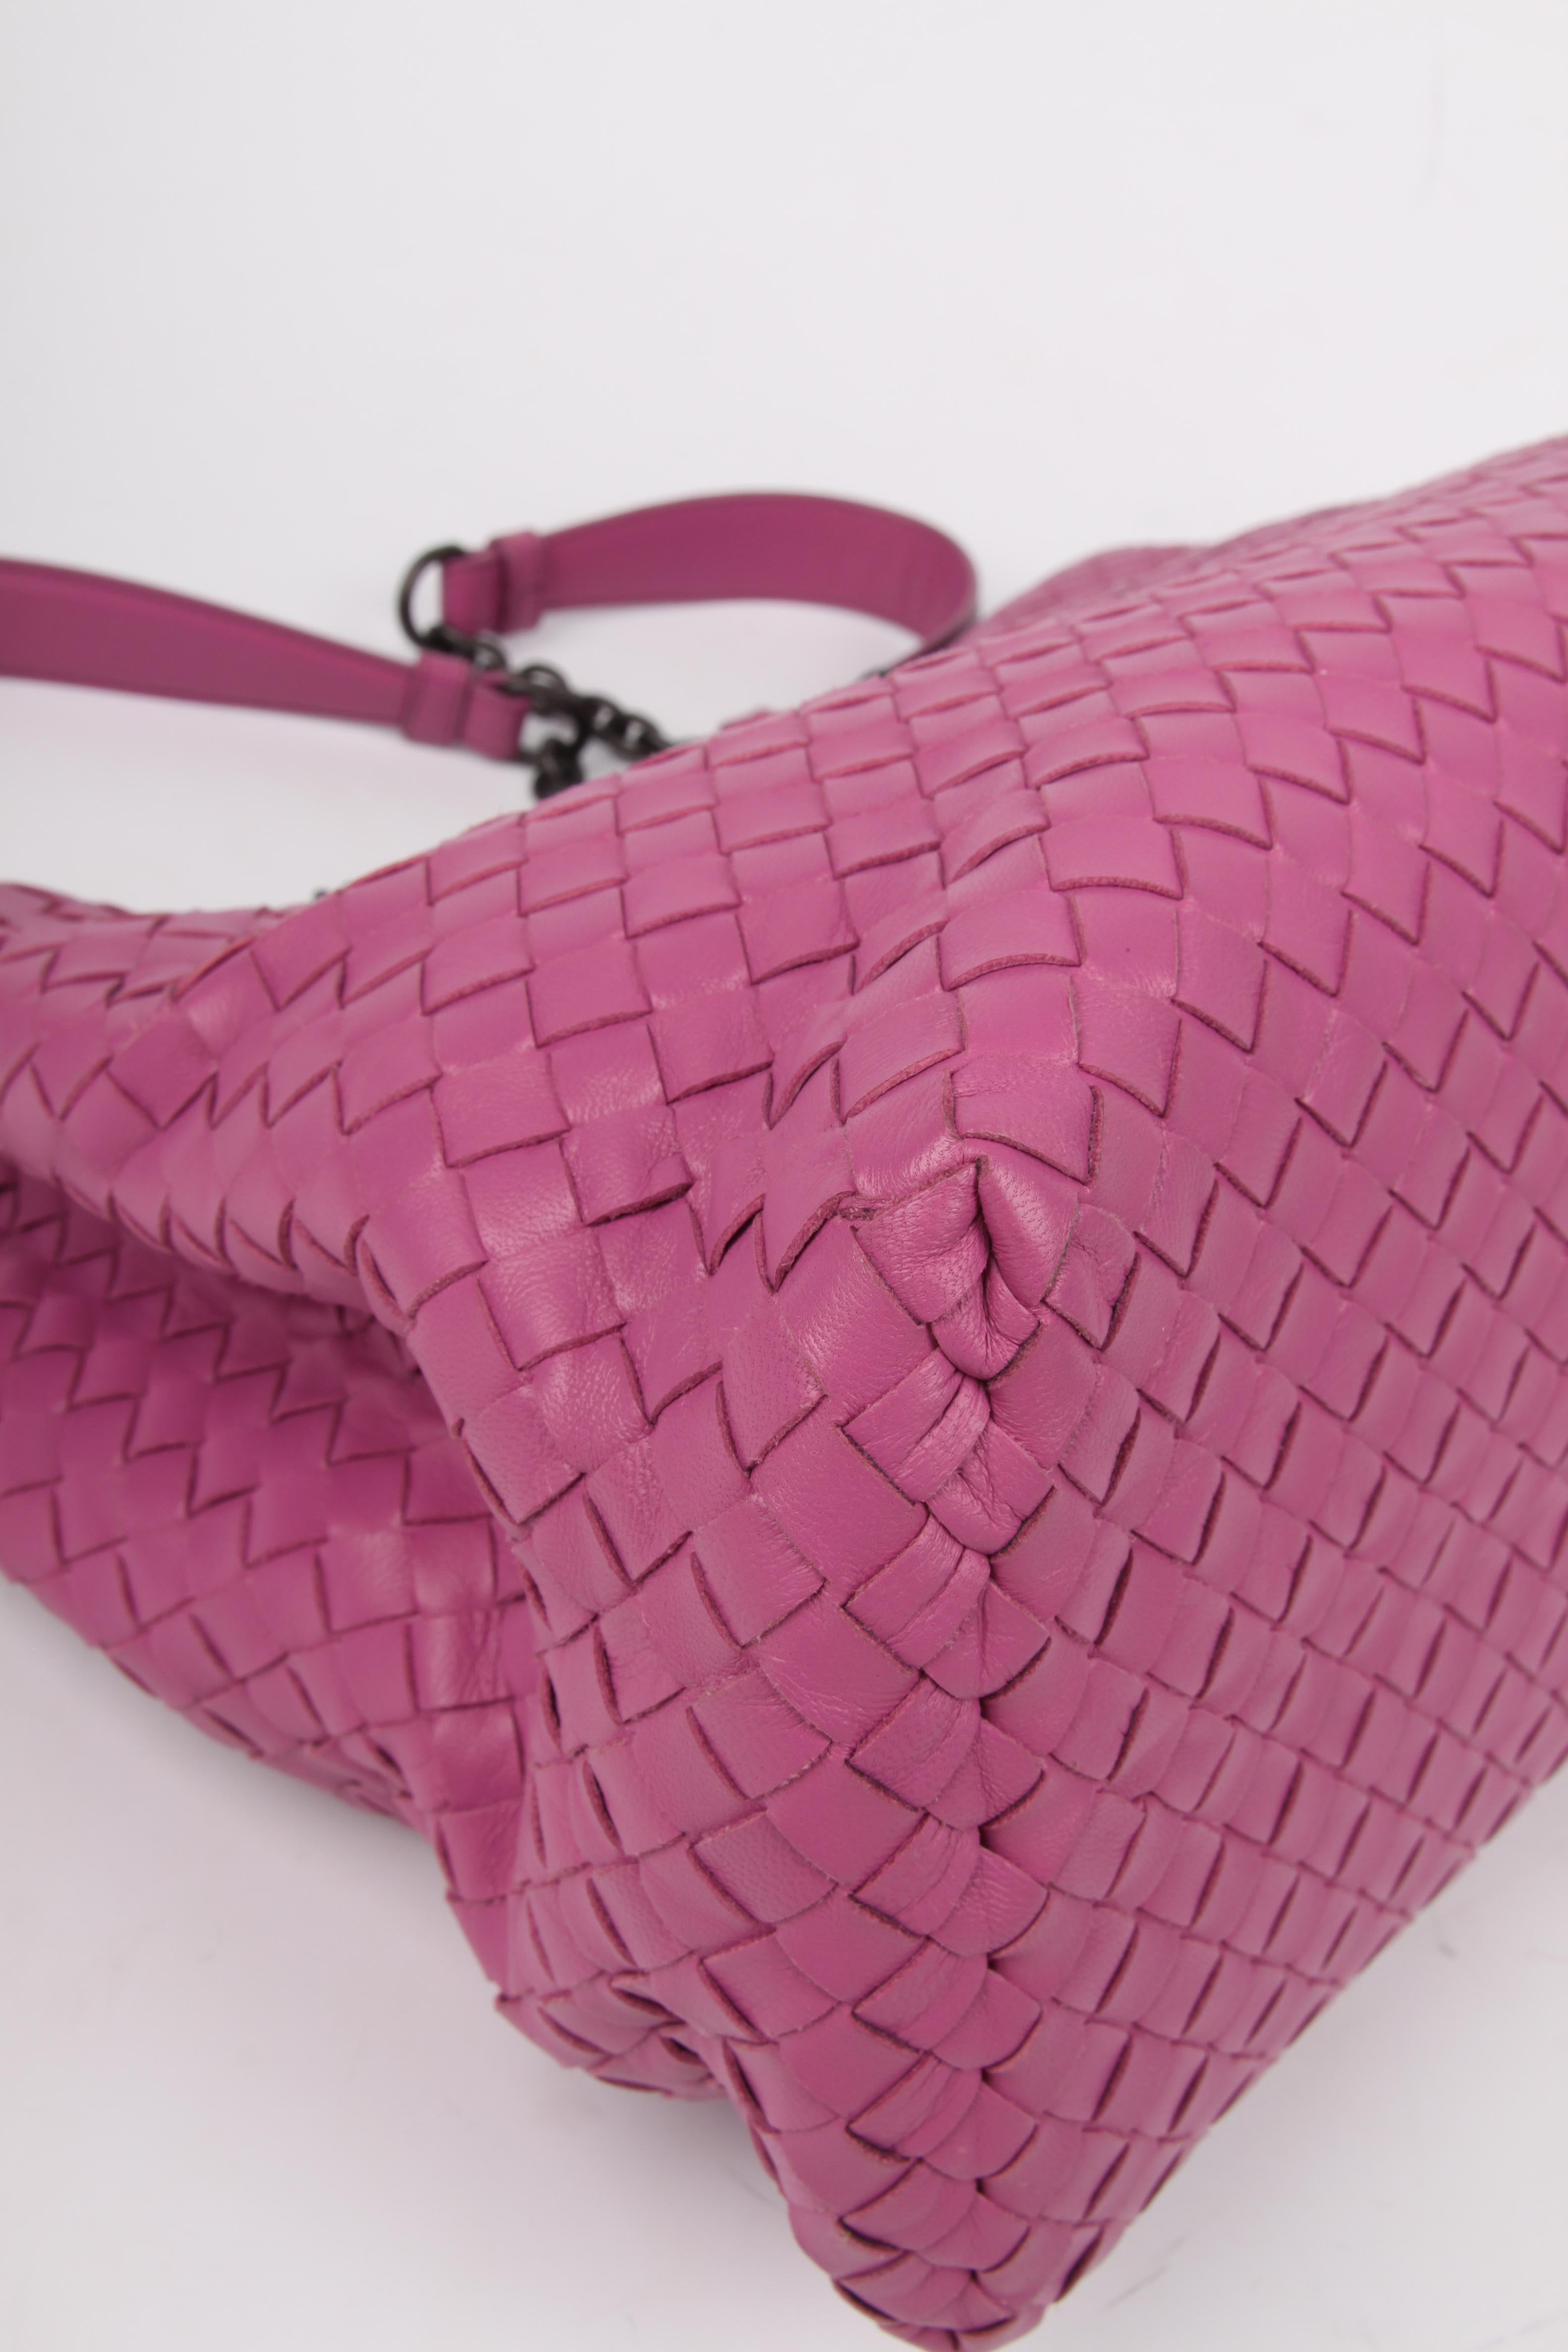 Bottega Veneta Intrecciato Double Chain Shoulder Bag - purple 5